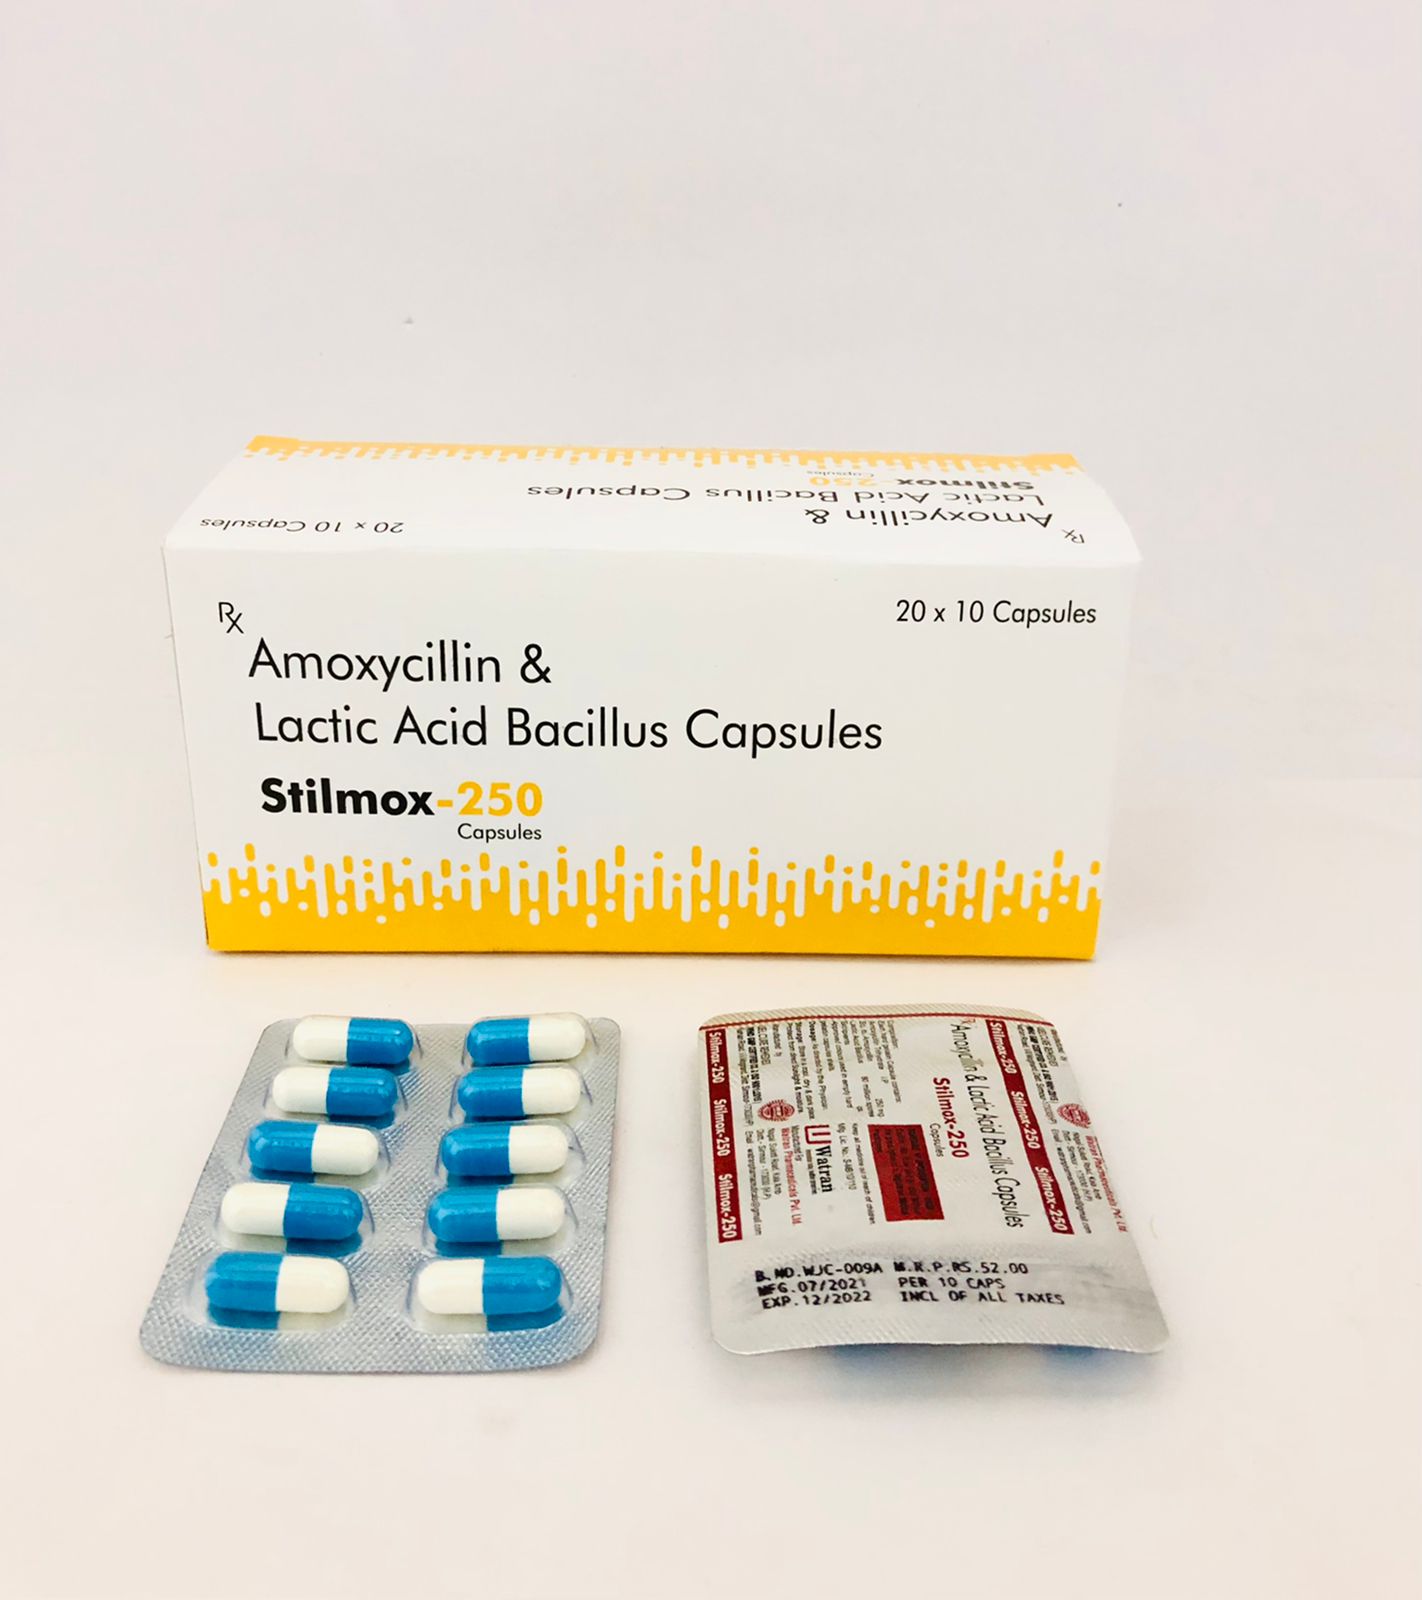 Amoxycillin 250 mg + Lactobacillusb 1.66 Million Spores